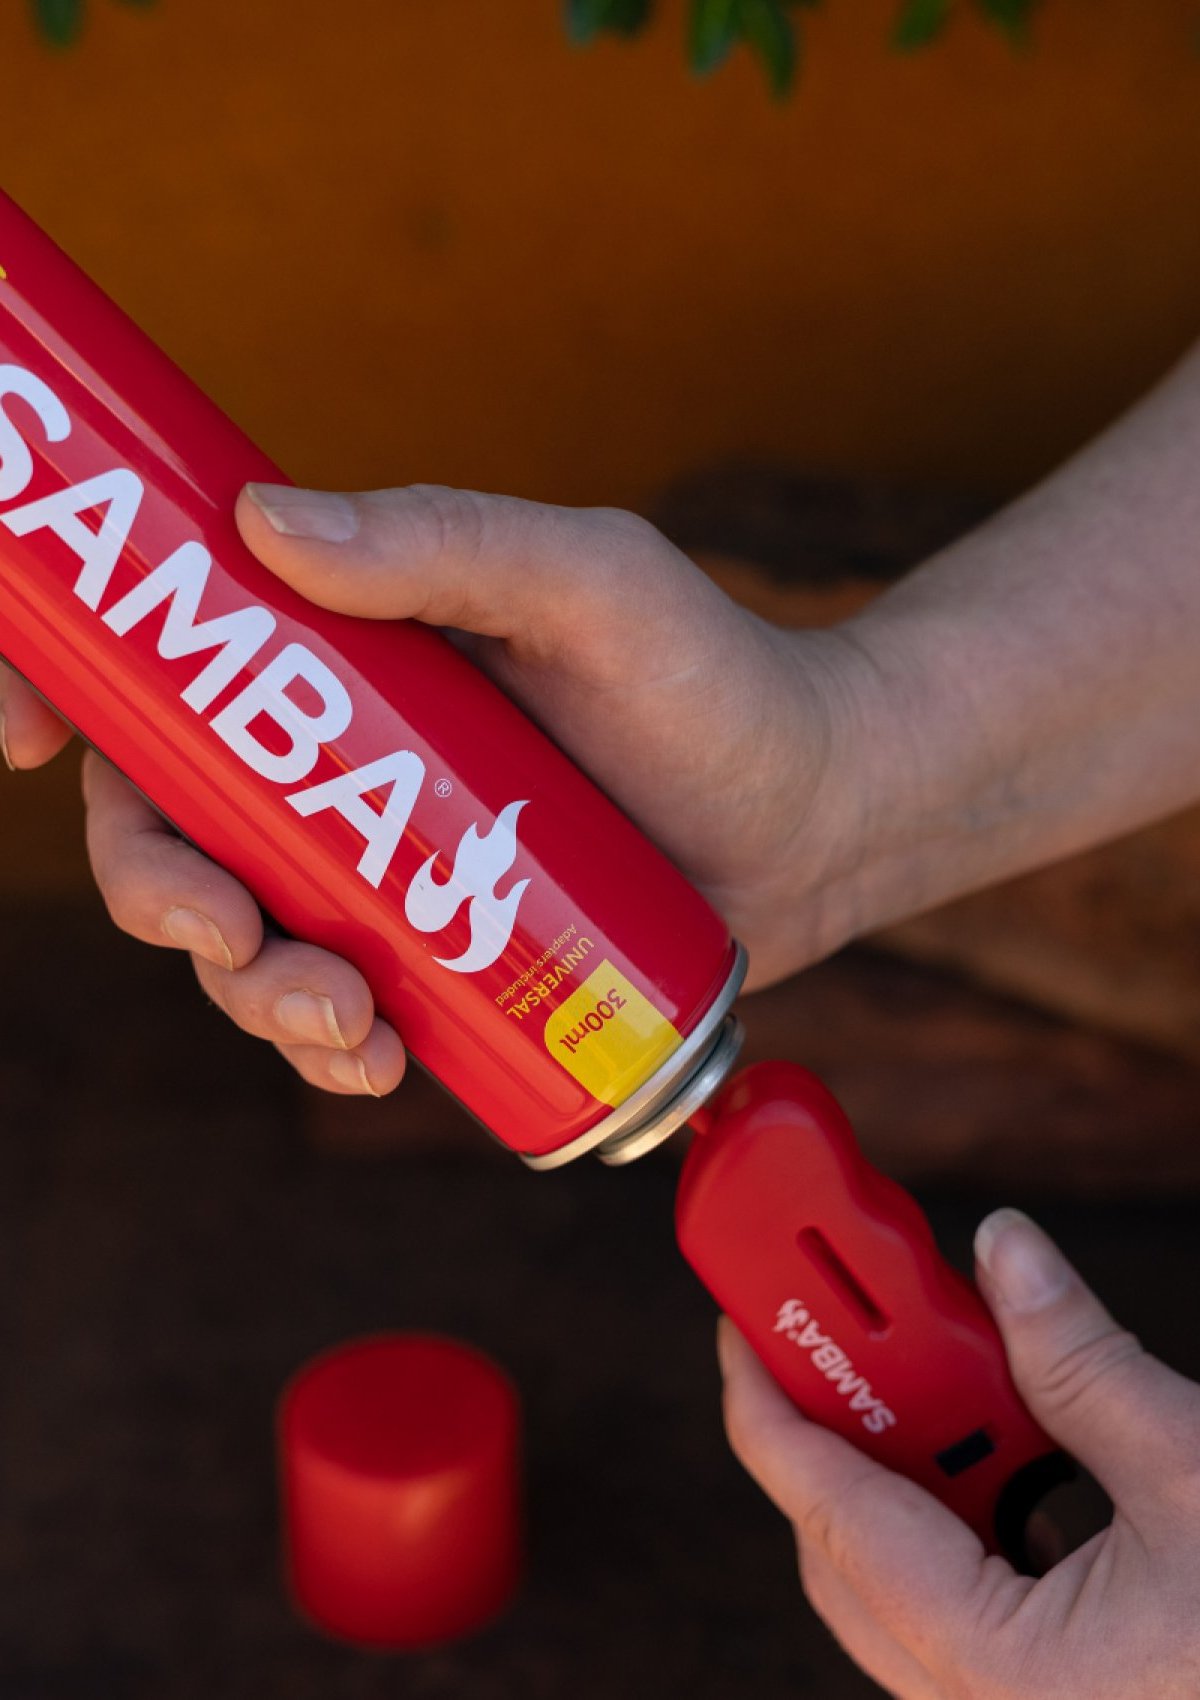 How to refill my Samba Gas Lighter?